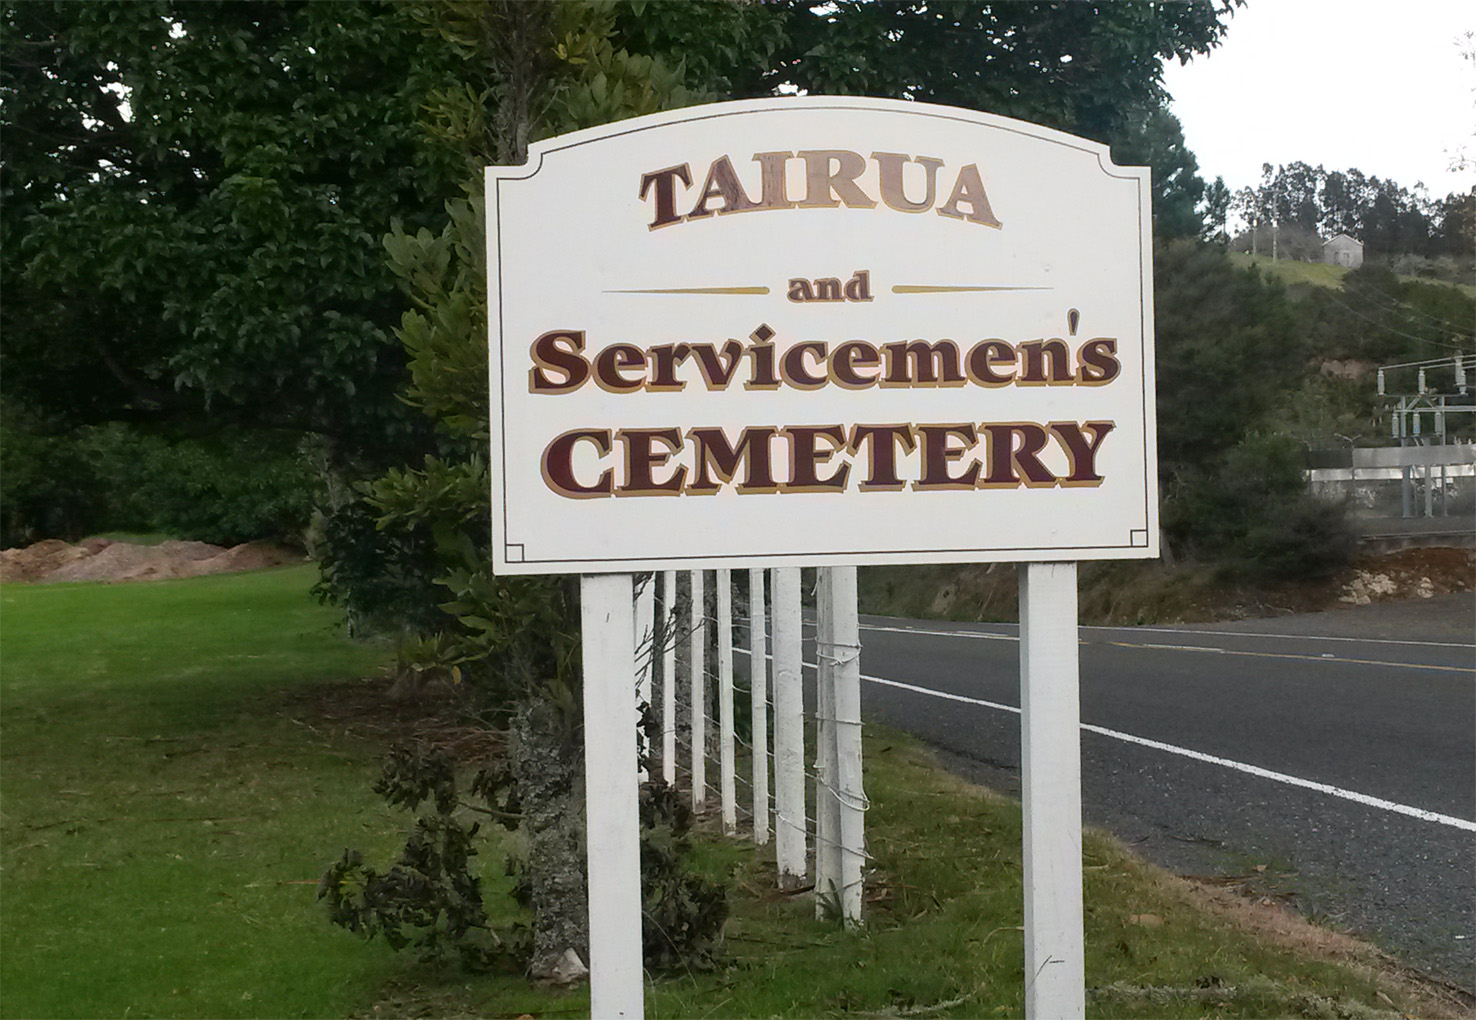 Tairua and Servicemen's Cemetery